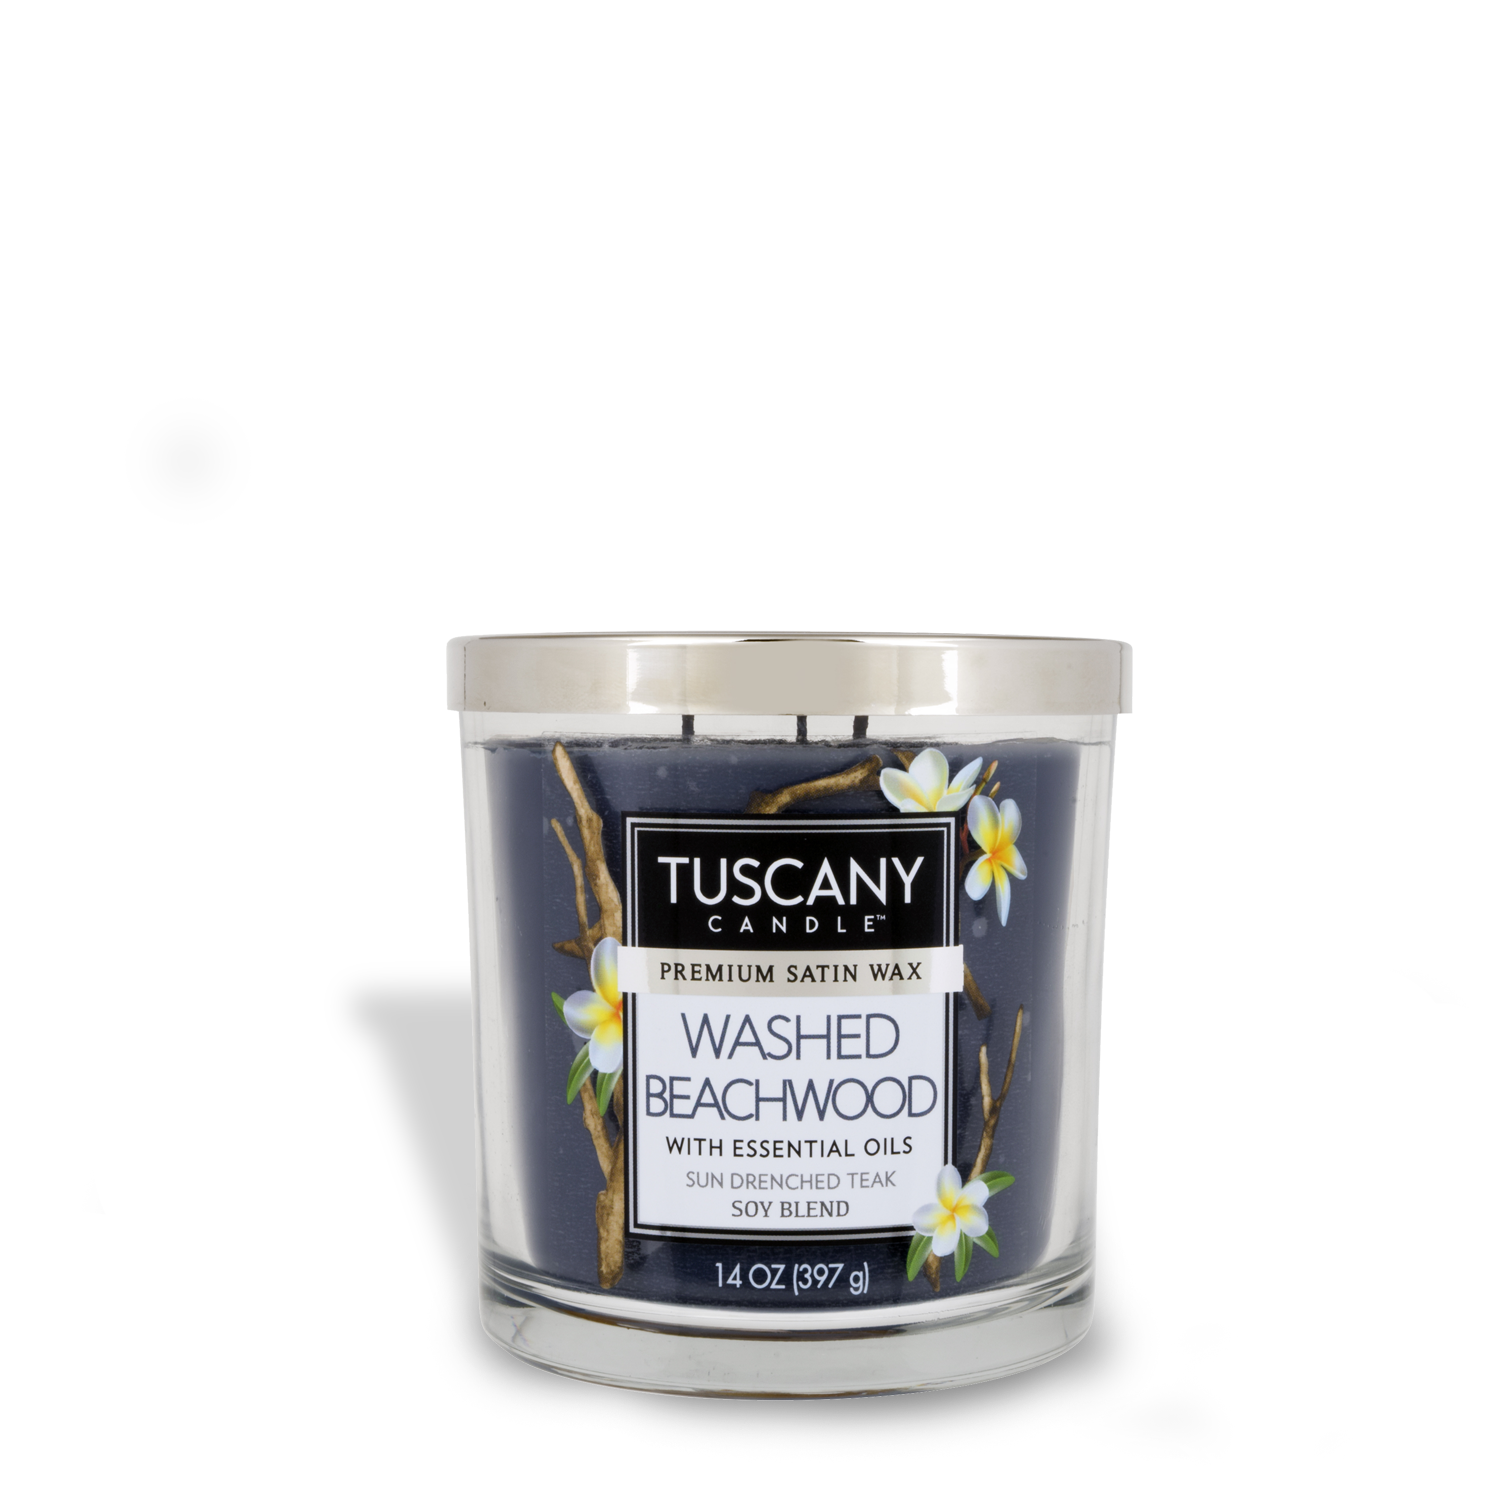 Tuscany Candle washed beachwood long-lasting scented jar candle (14 oz) with hints of teakwood.